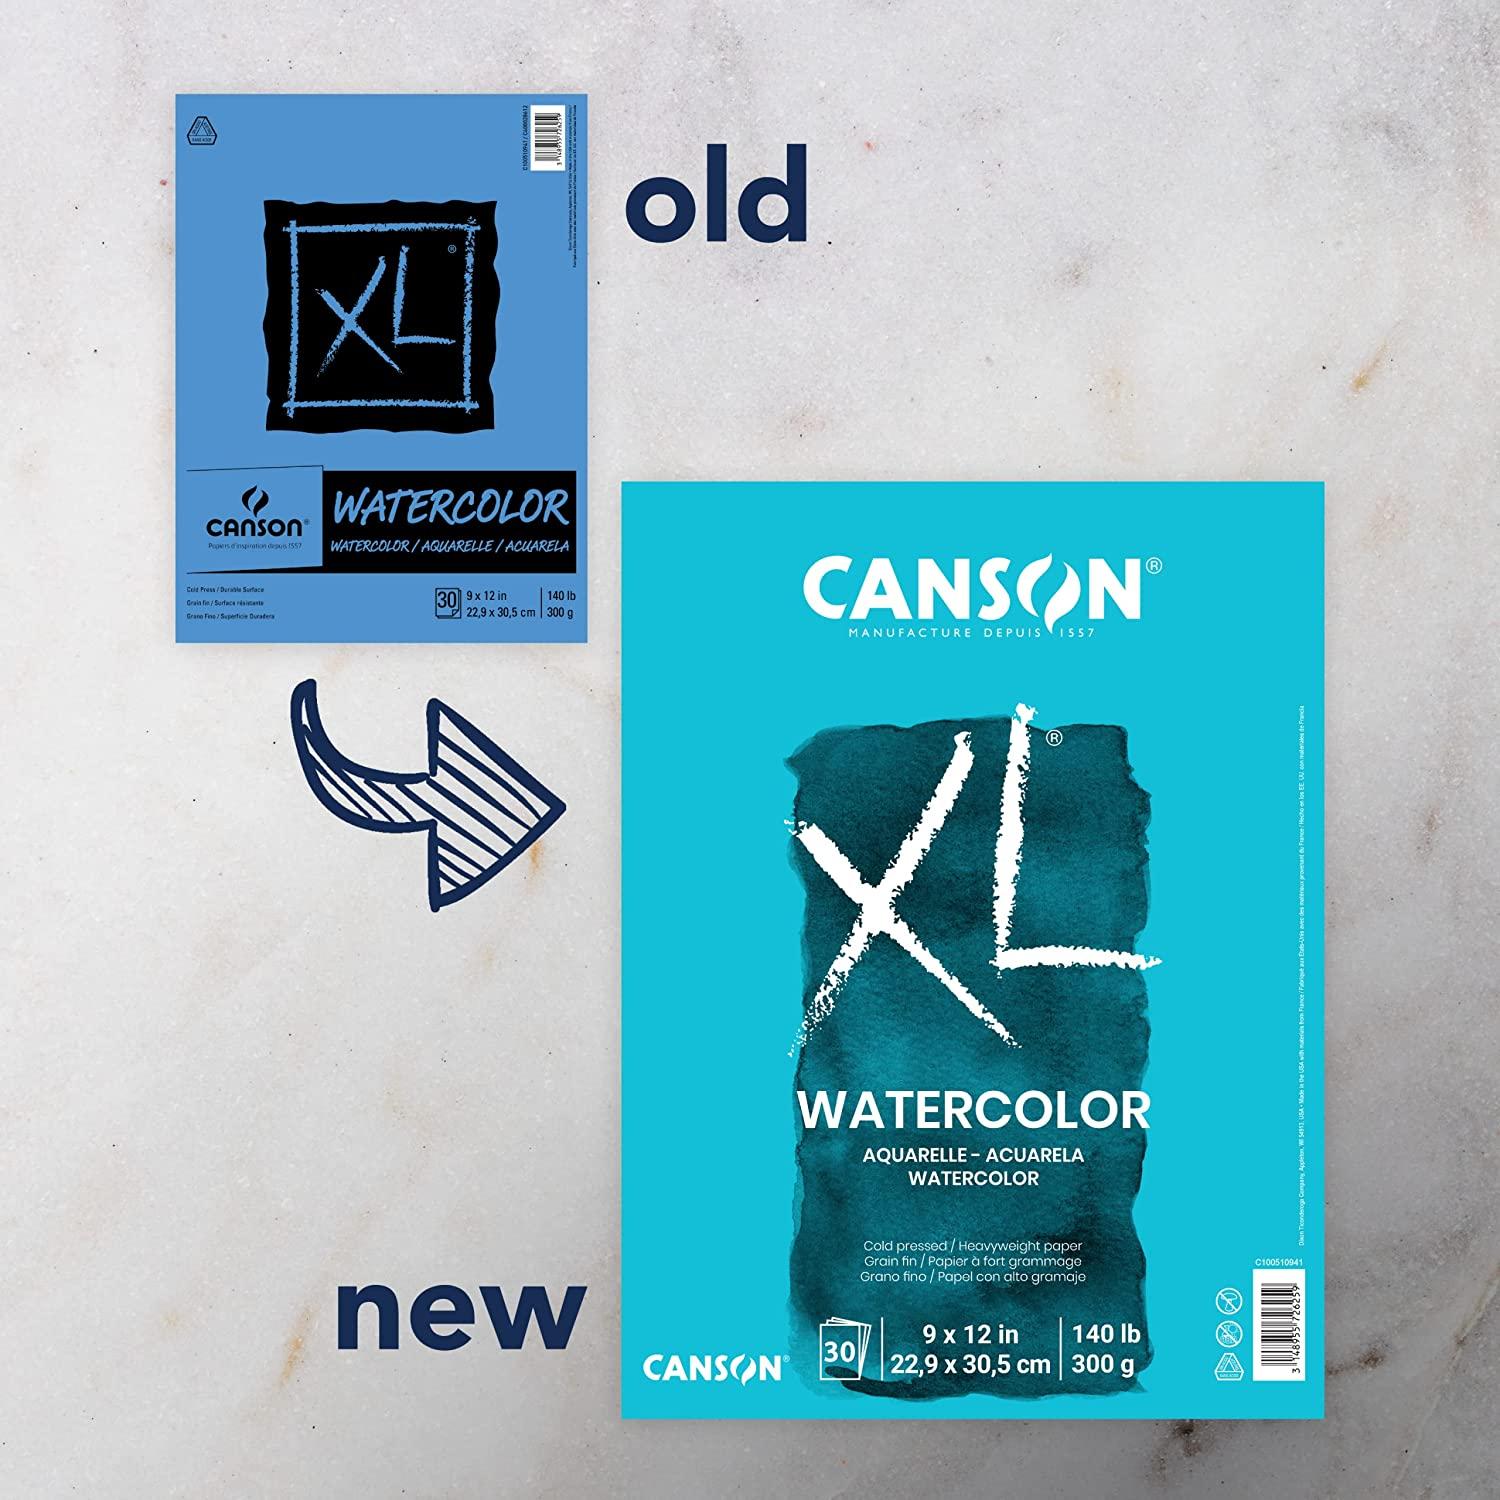  Canson XL Mixed Media Paper Pad, 98 lb, 9 x 12 Inches